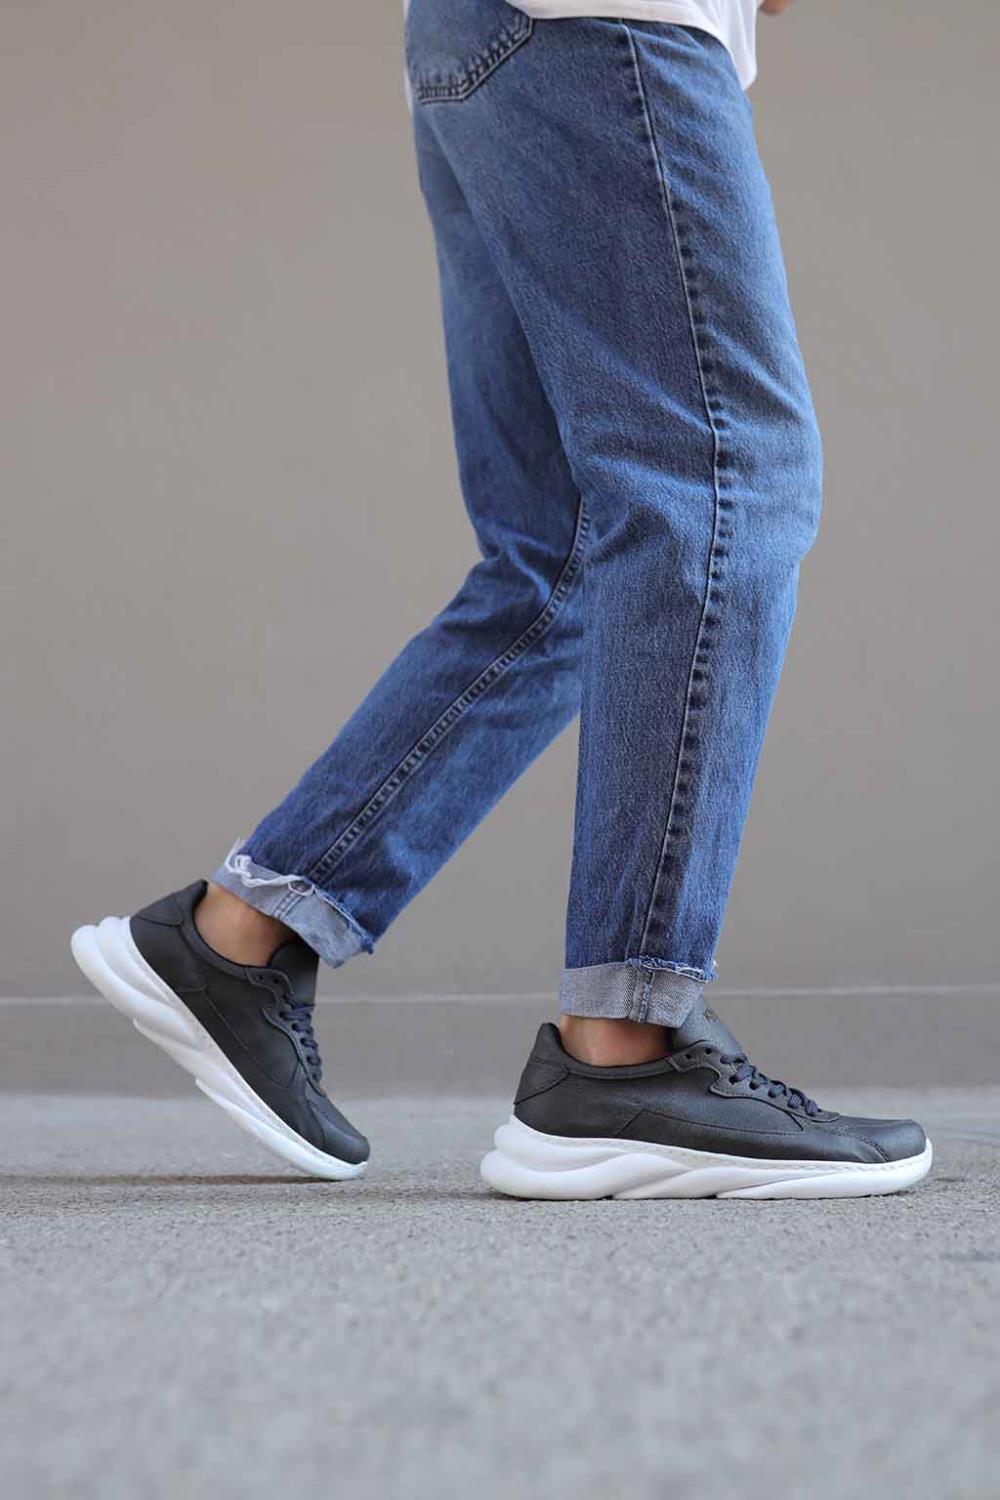 Men's Sneakers Shoes 065 Gray - STREET MODE ™